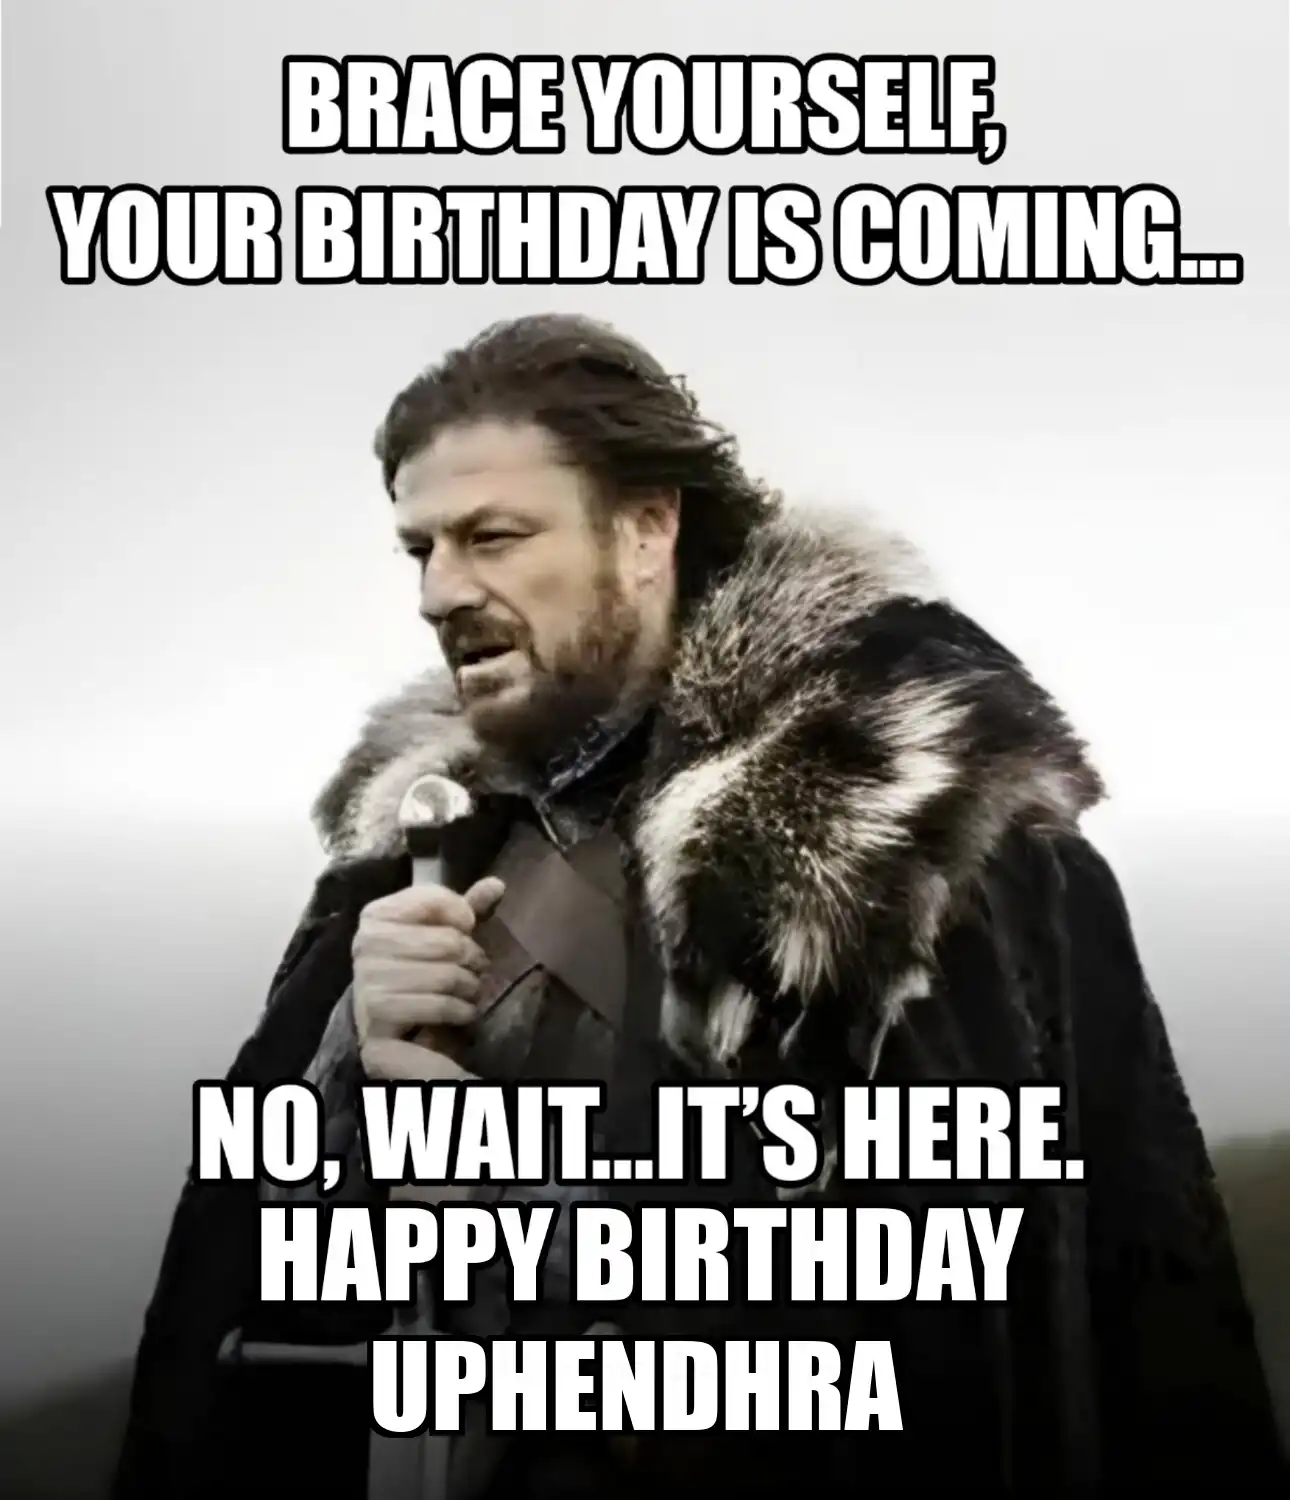 Happy Birthday Uphendhra Brace Yourself Your Birthday Is Coming Meme